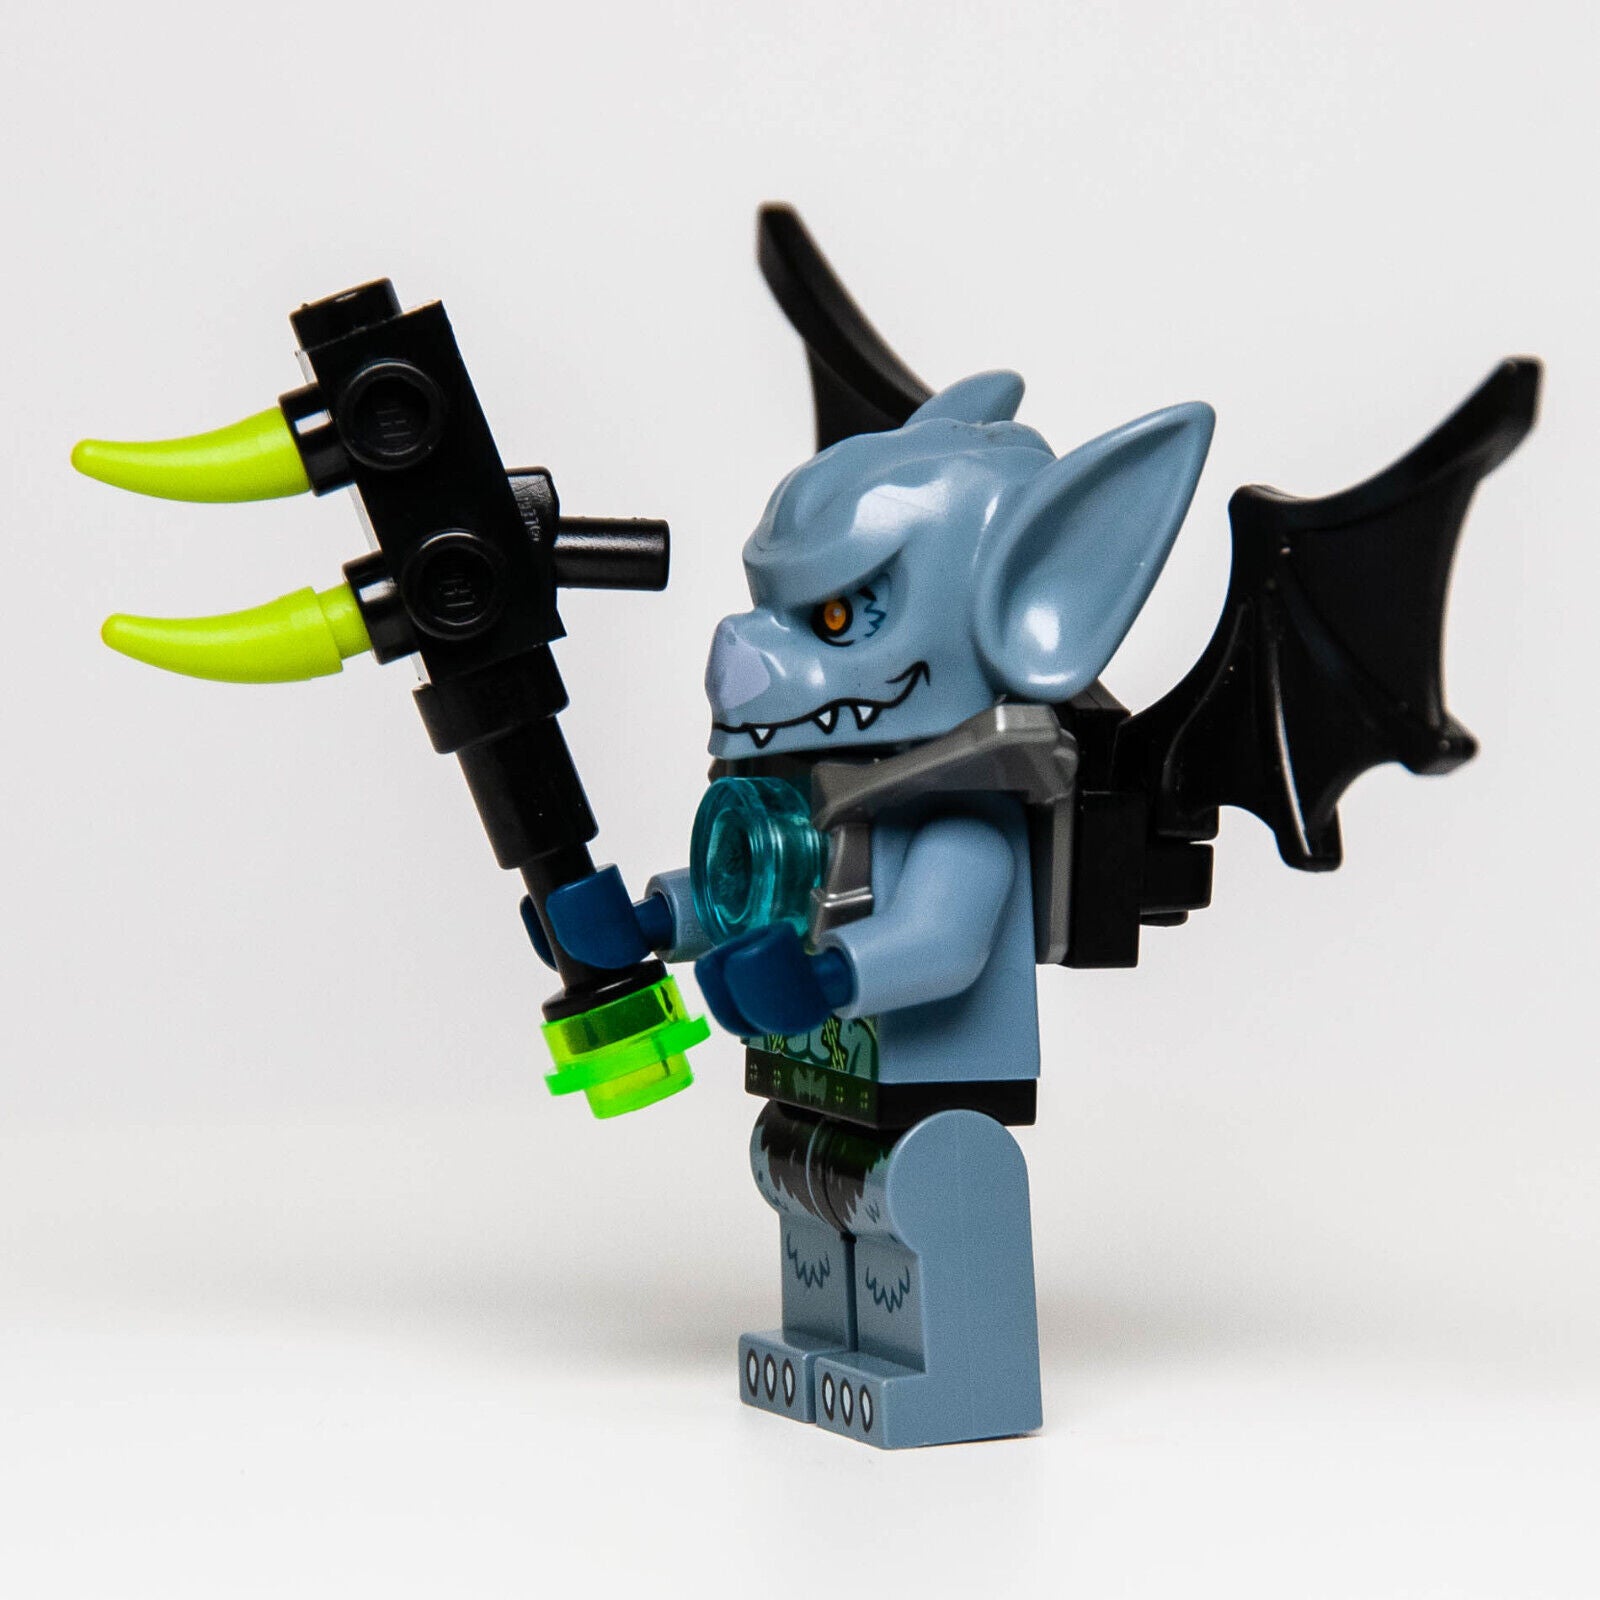 LEGO Chima Minifigure, Blista Bat with weapon (loc057) 70137 70134